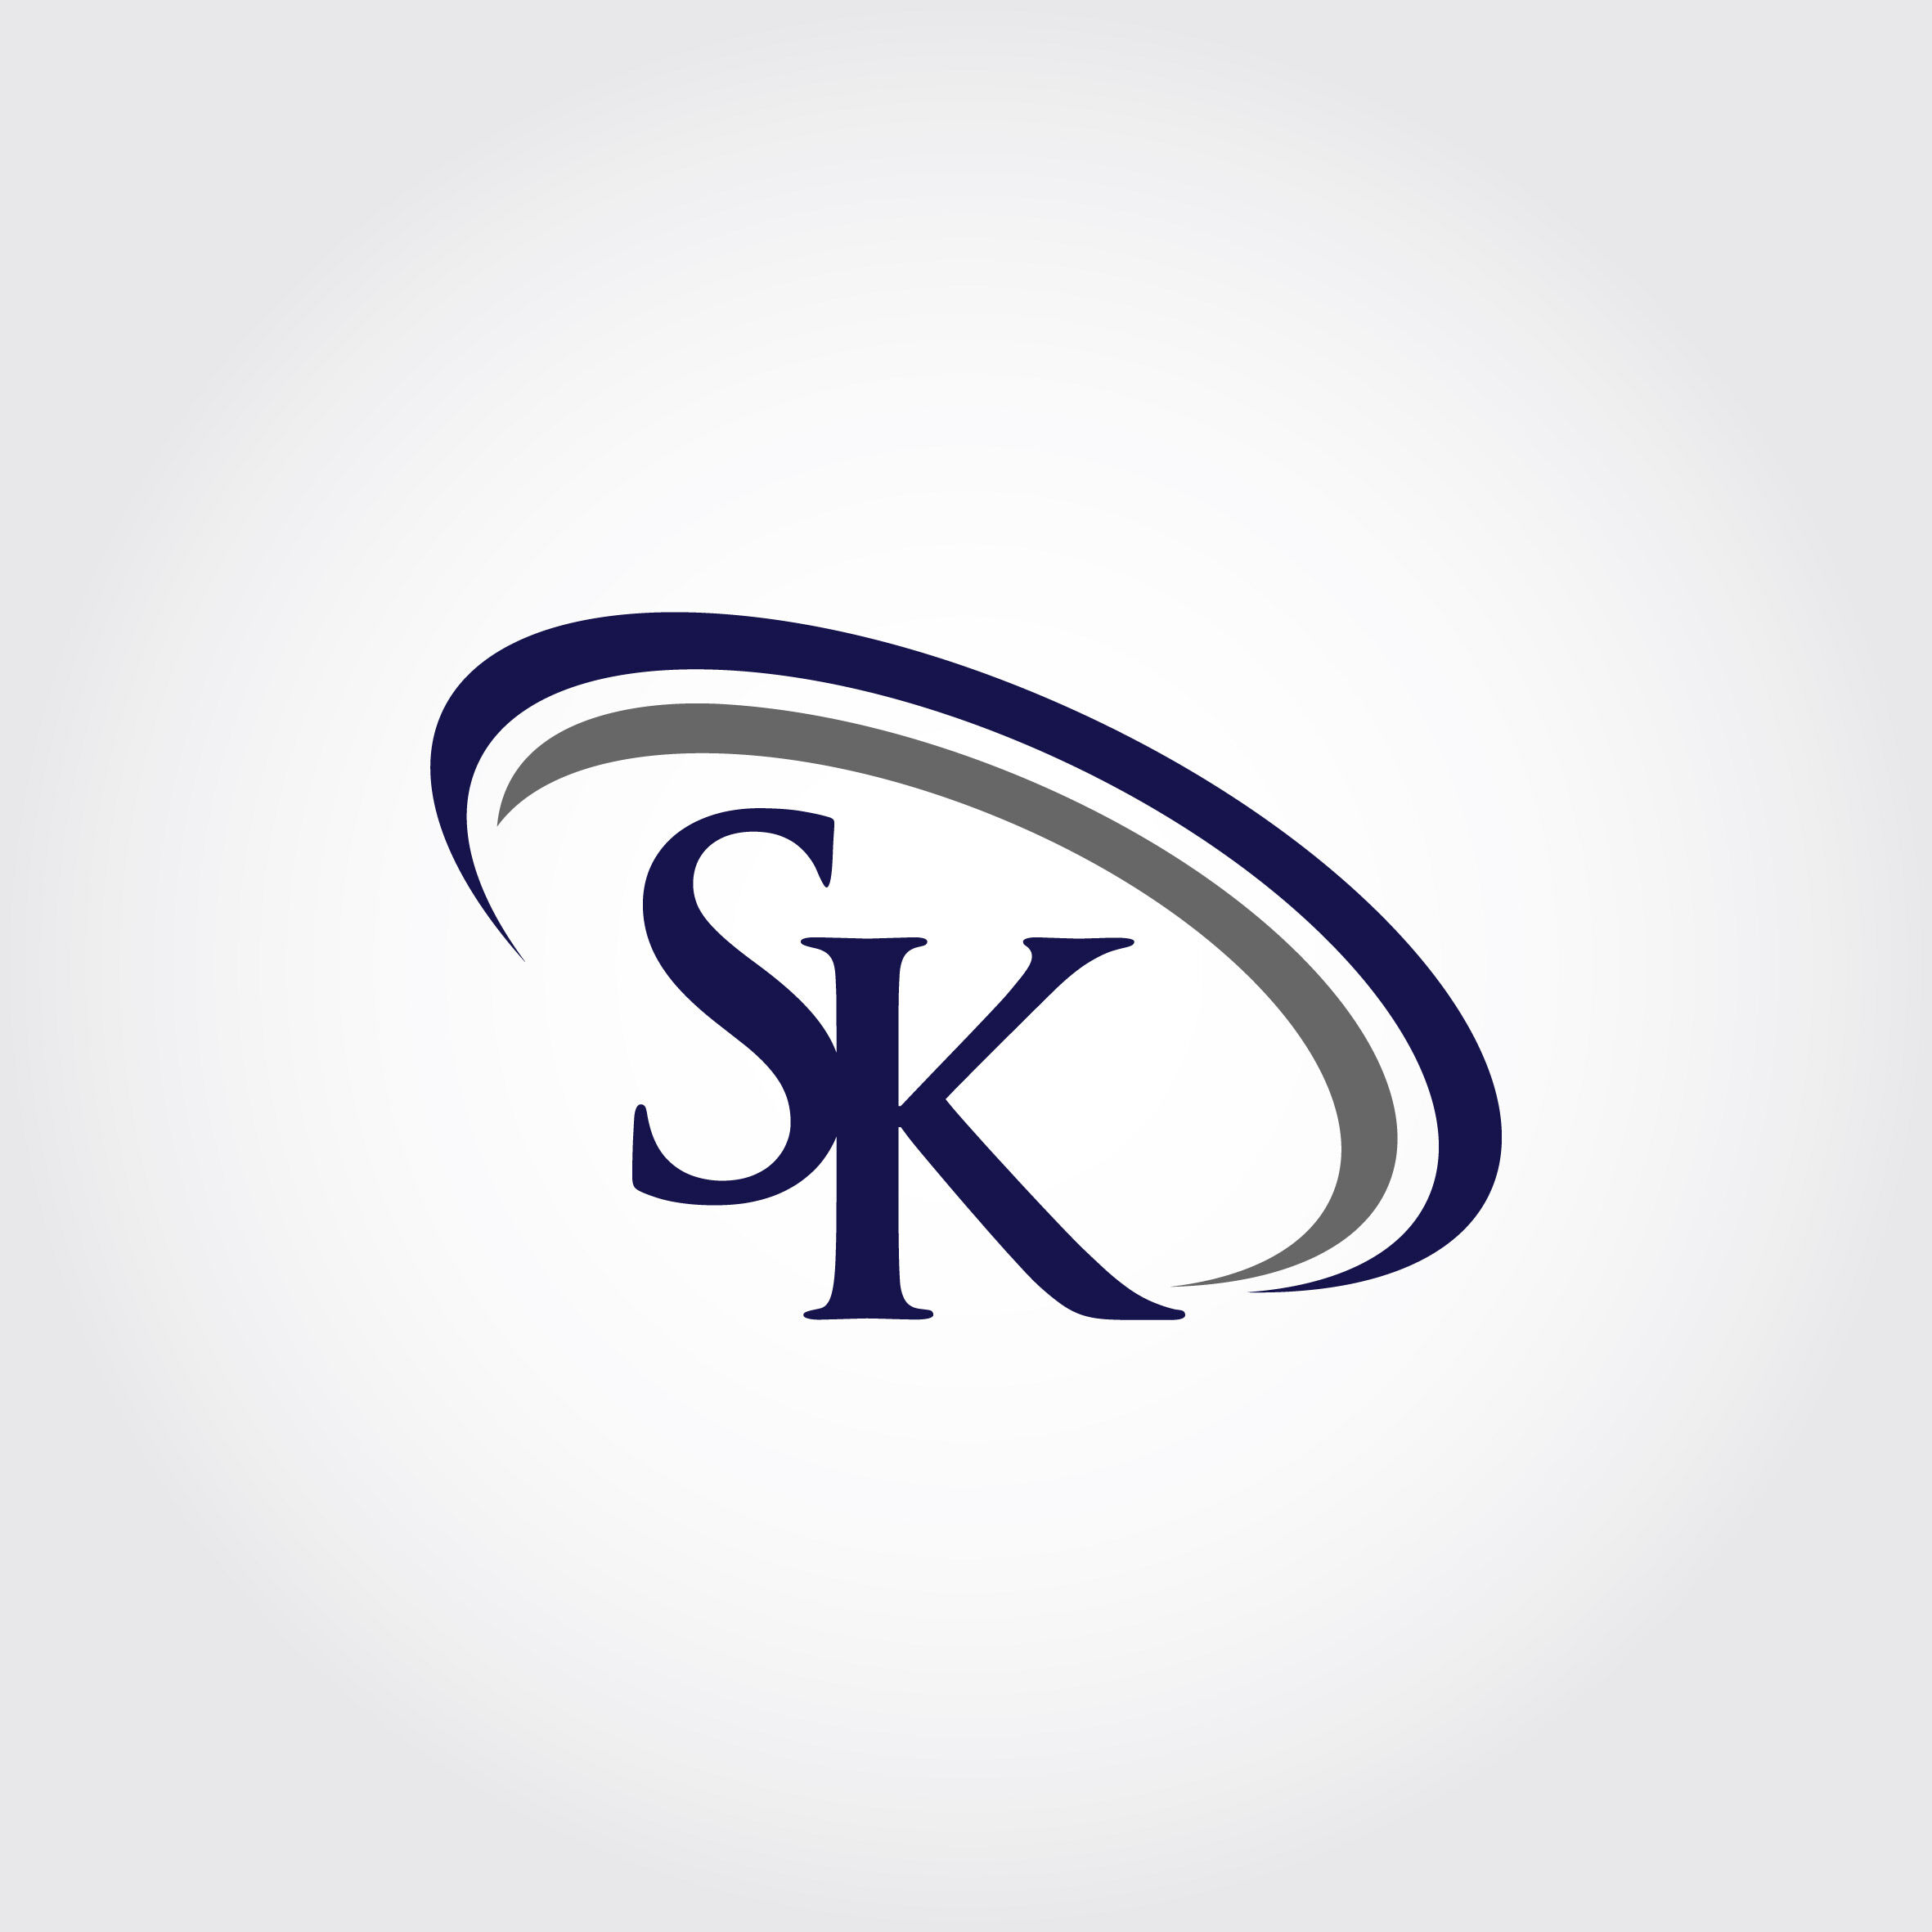 Sk Logo Stock Illustrations, Cliparts and Royalty Free Sk Logo Vectors